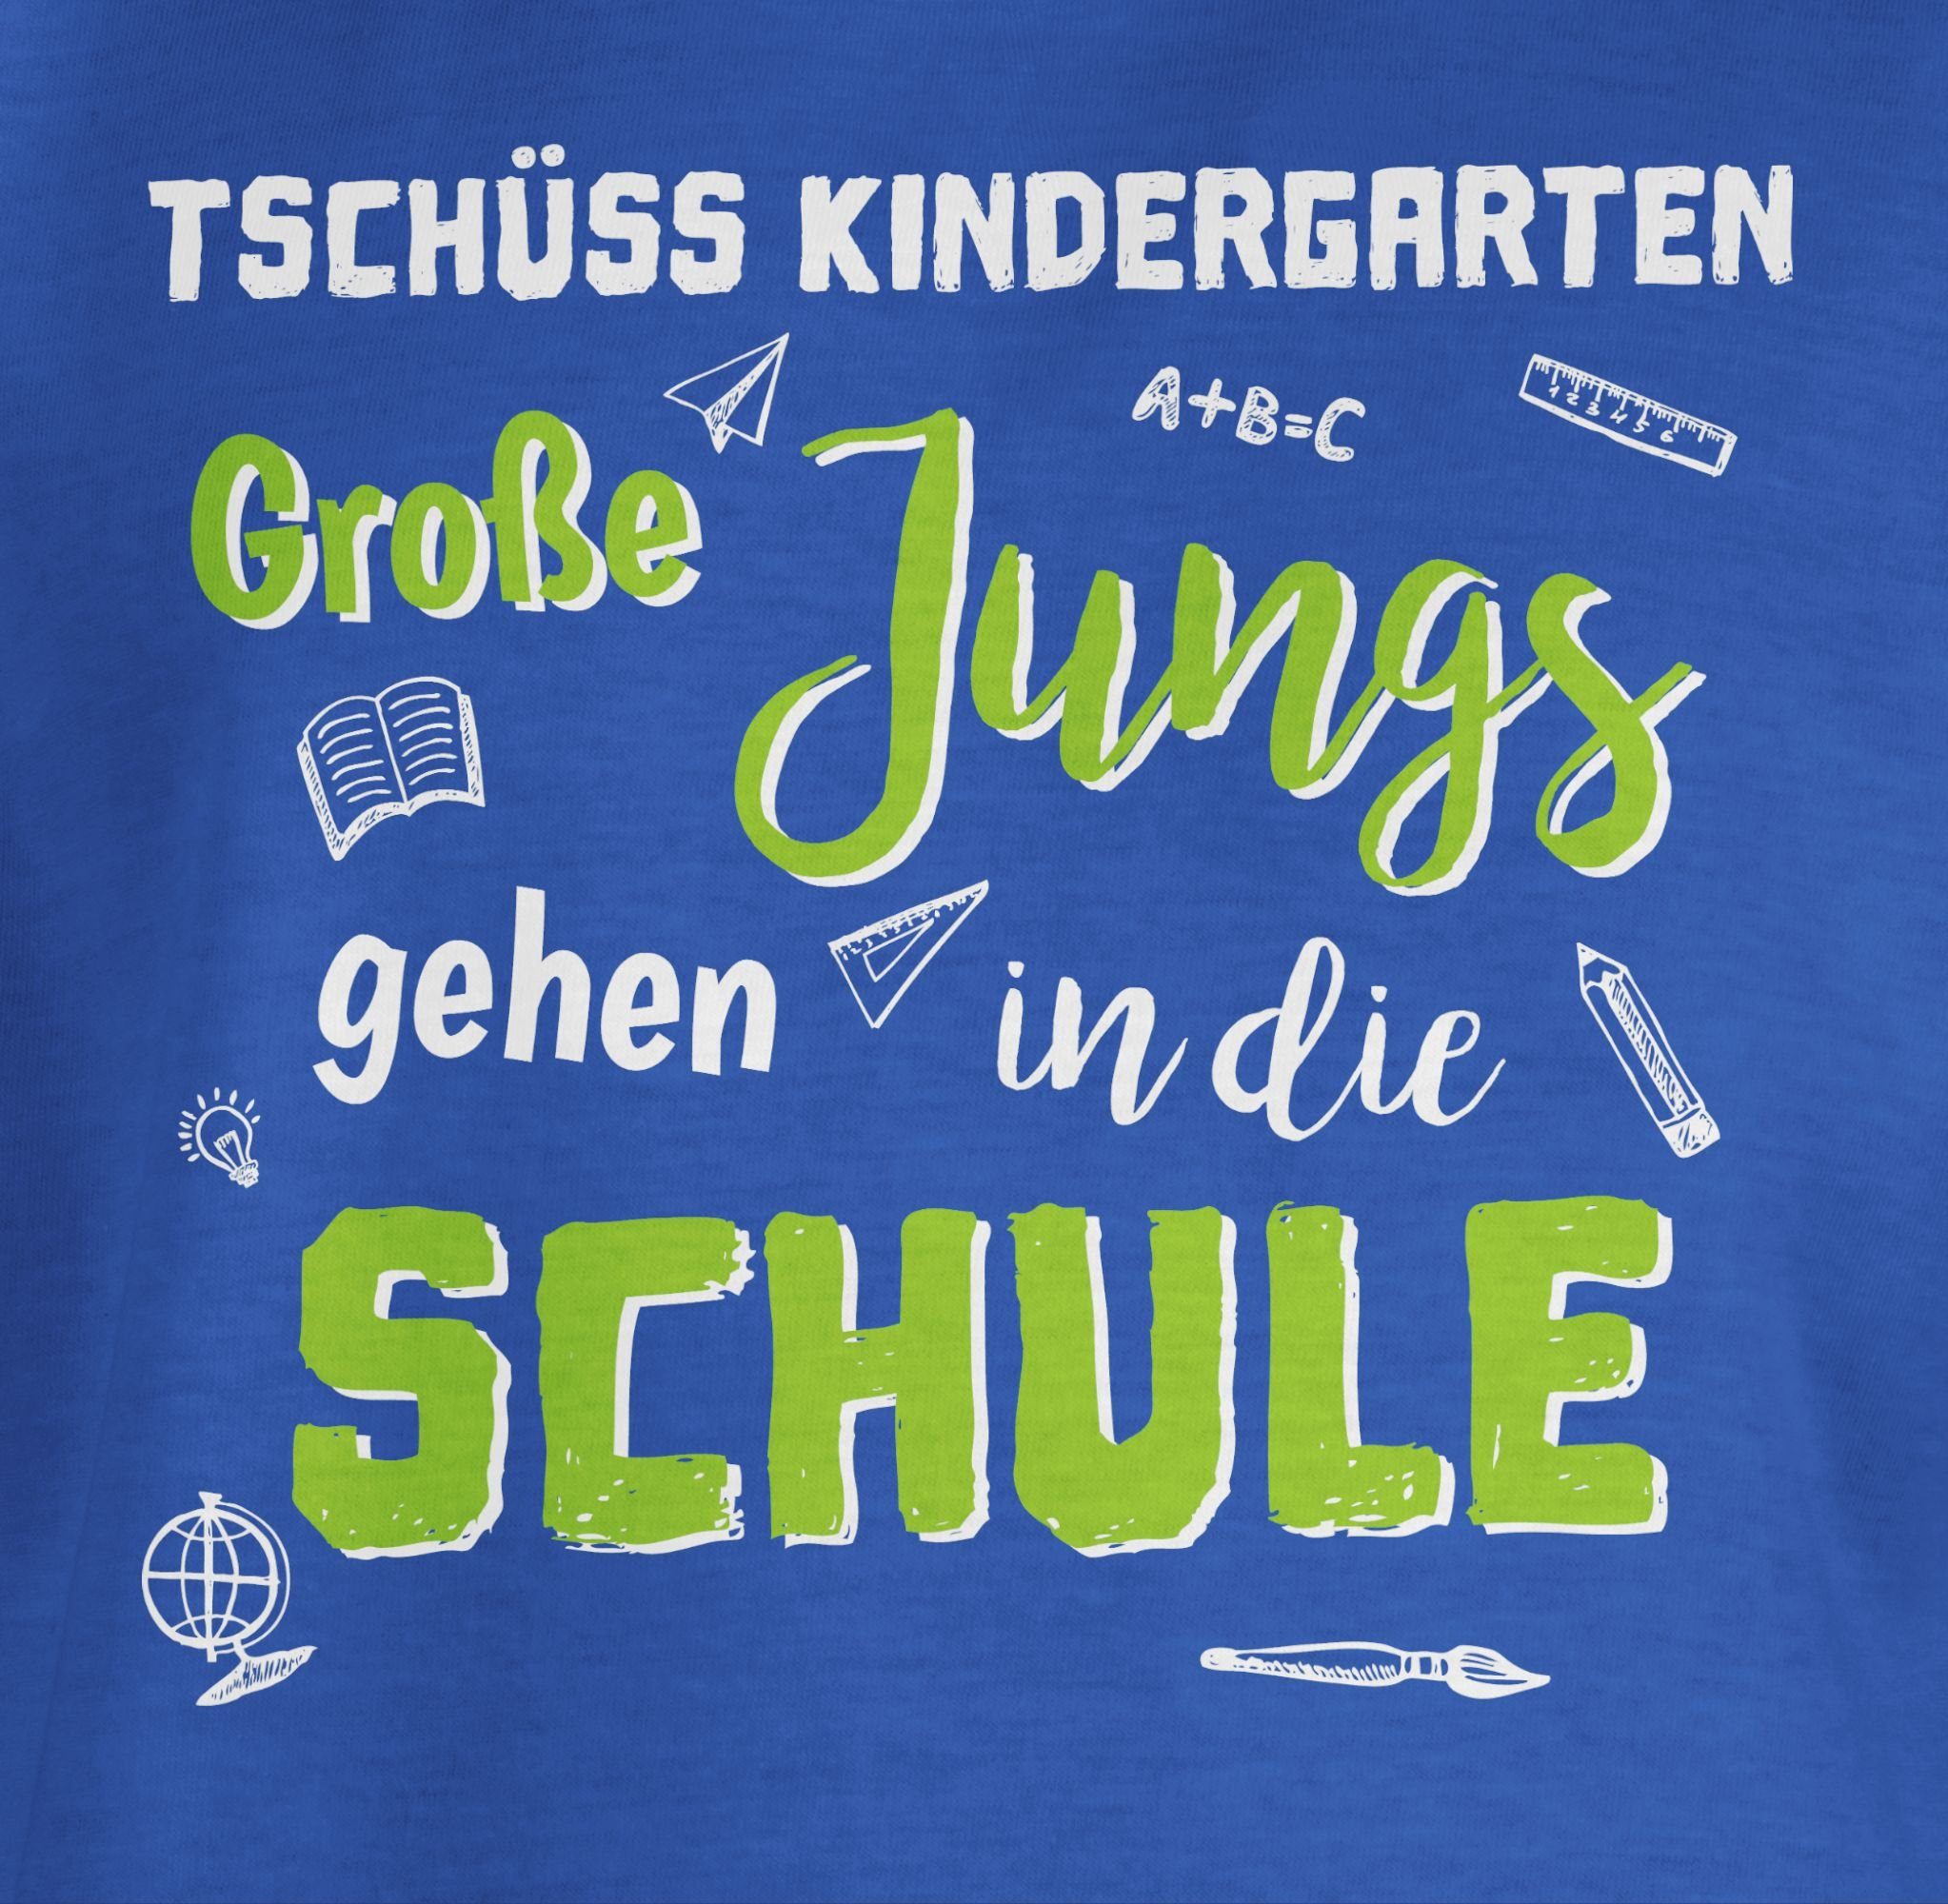 2 in Große Royalblau Junge T-Shirt Geschenke die gehen Jungs Schule Shirtracer Kindergarten Einschulung Schulanfang Tschüss